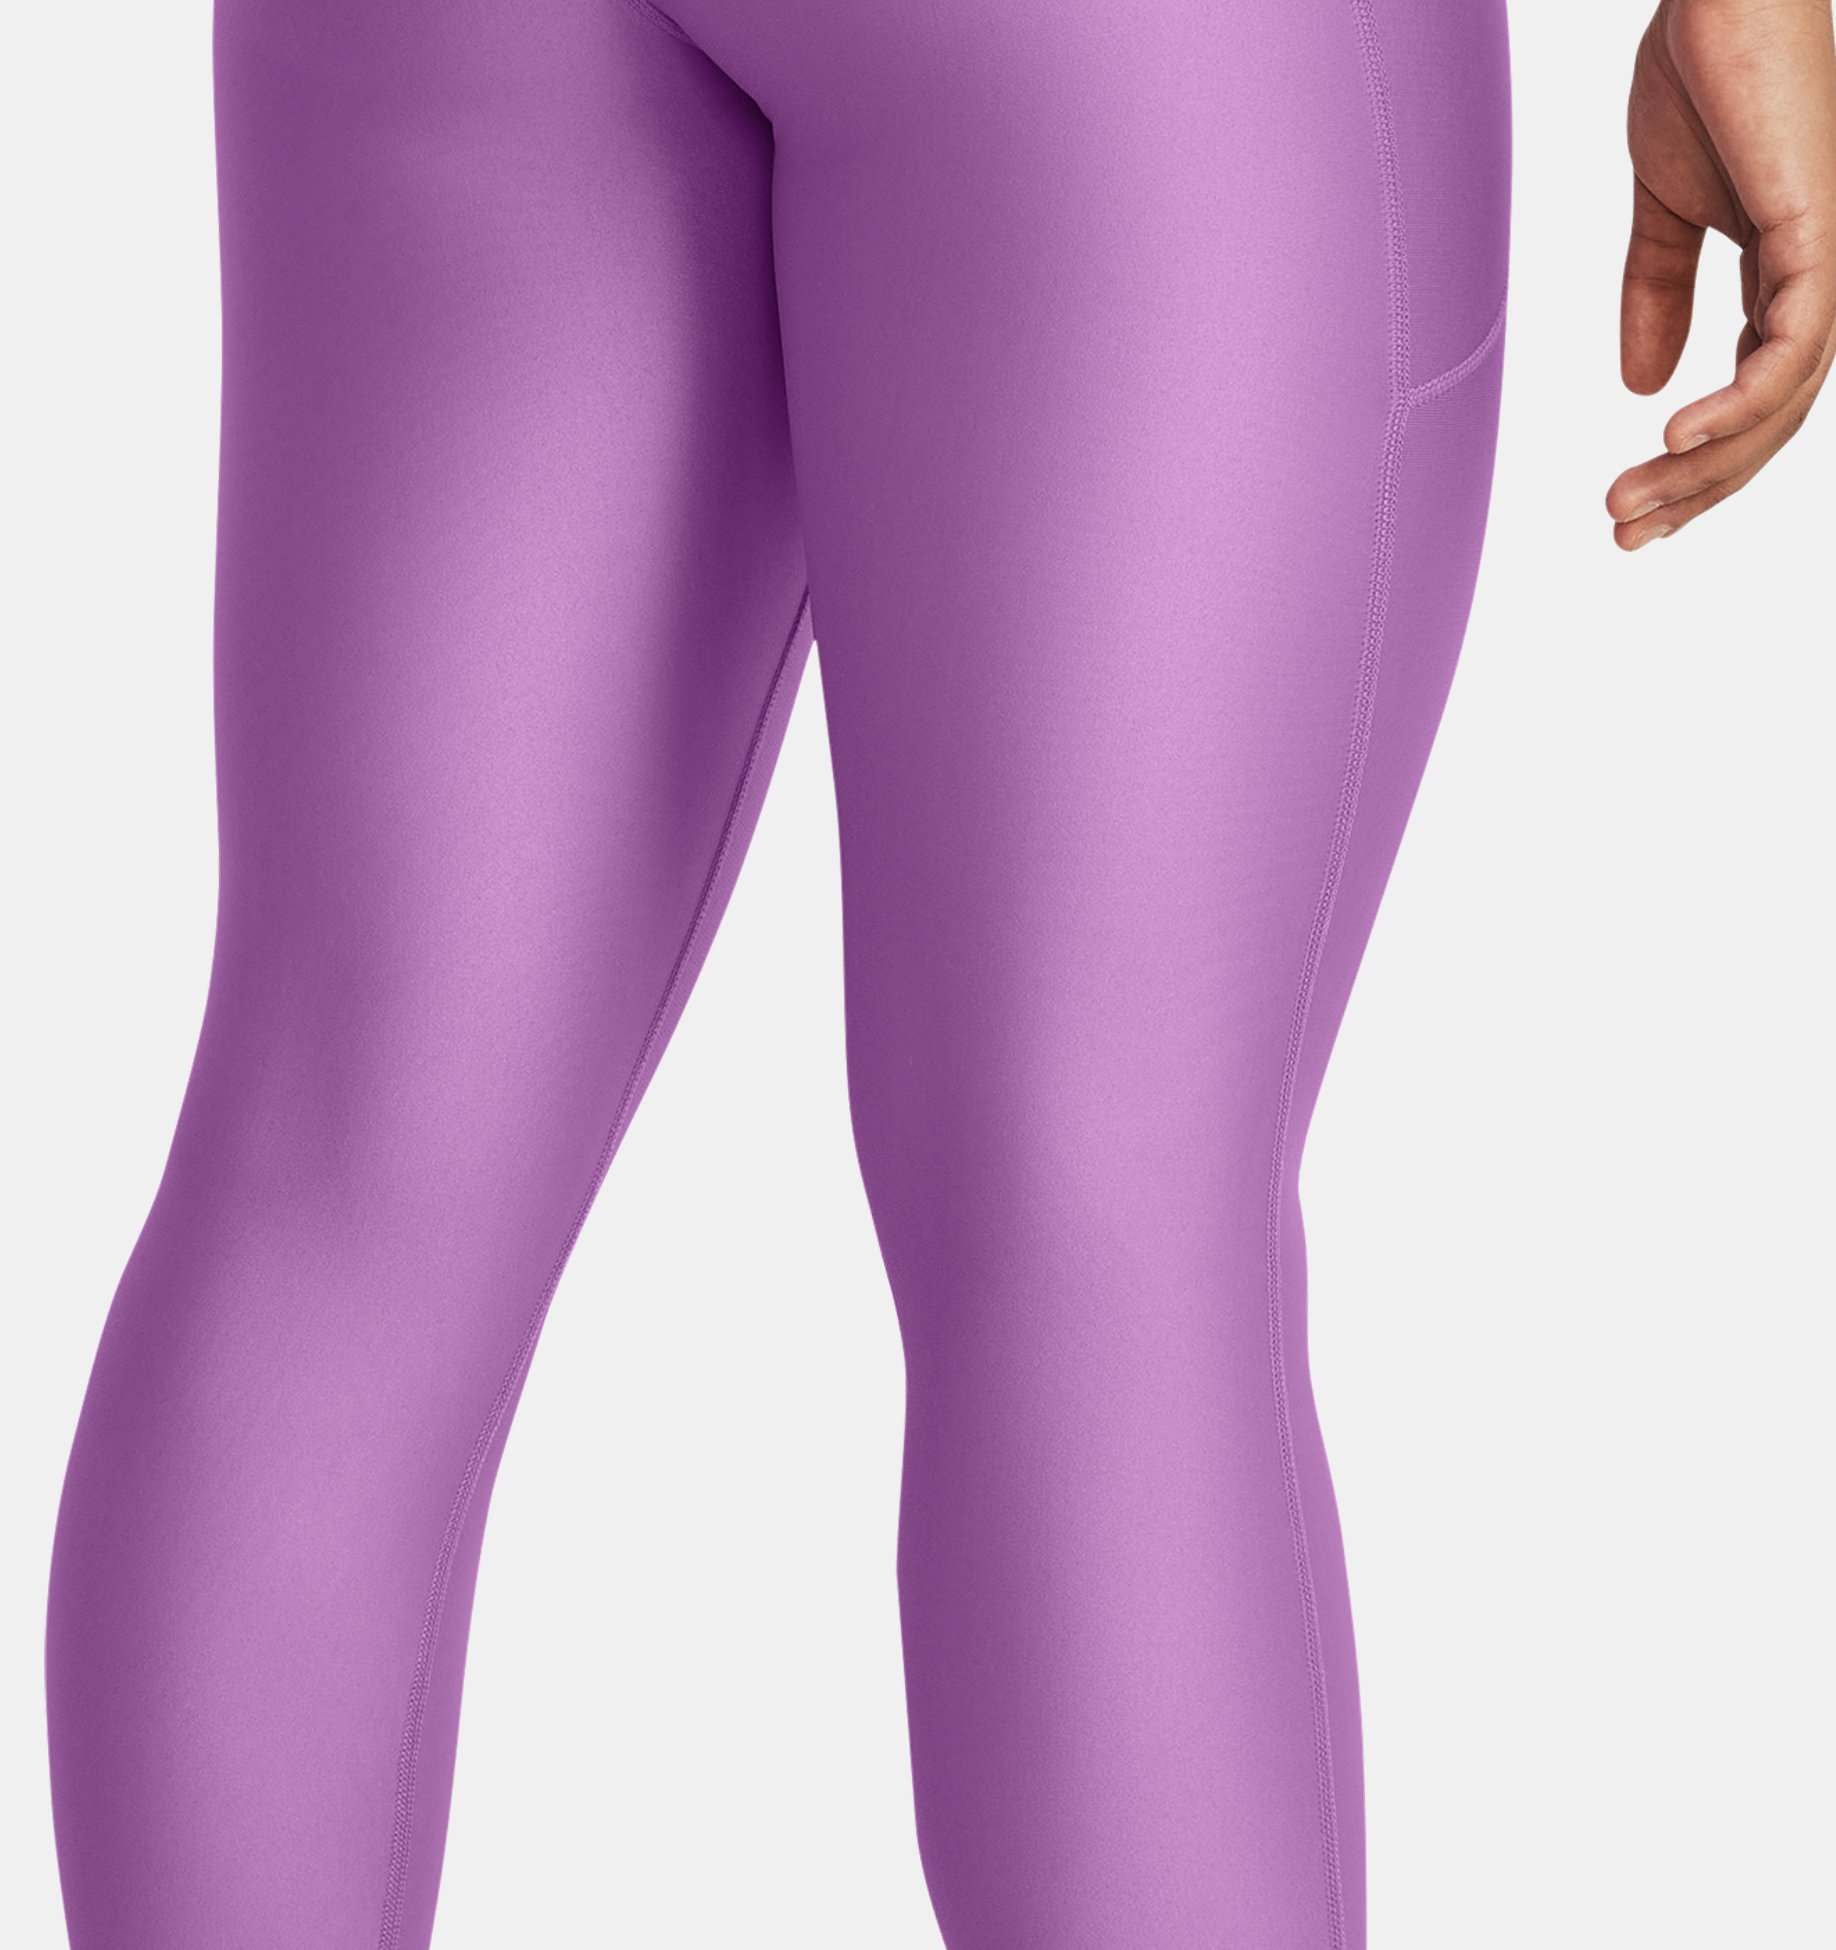 Under Armour Heat Gear Compression Leggings Women's Sz Small purple camo :  r/gym_apparel_for_women